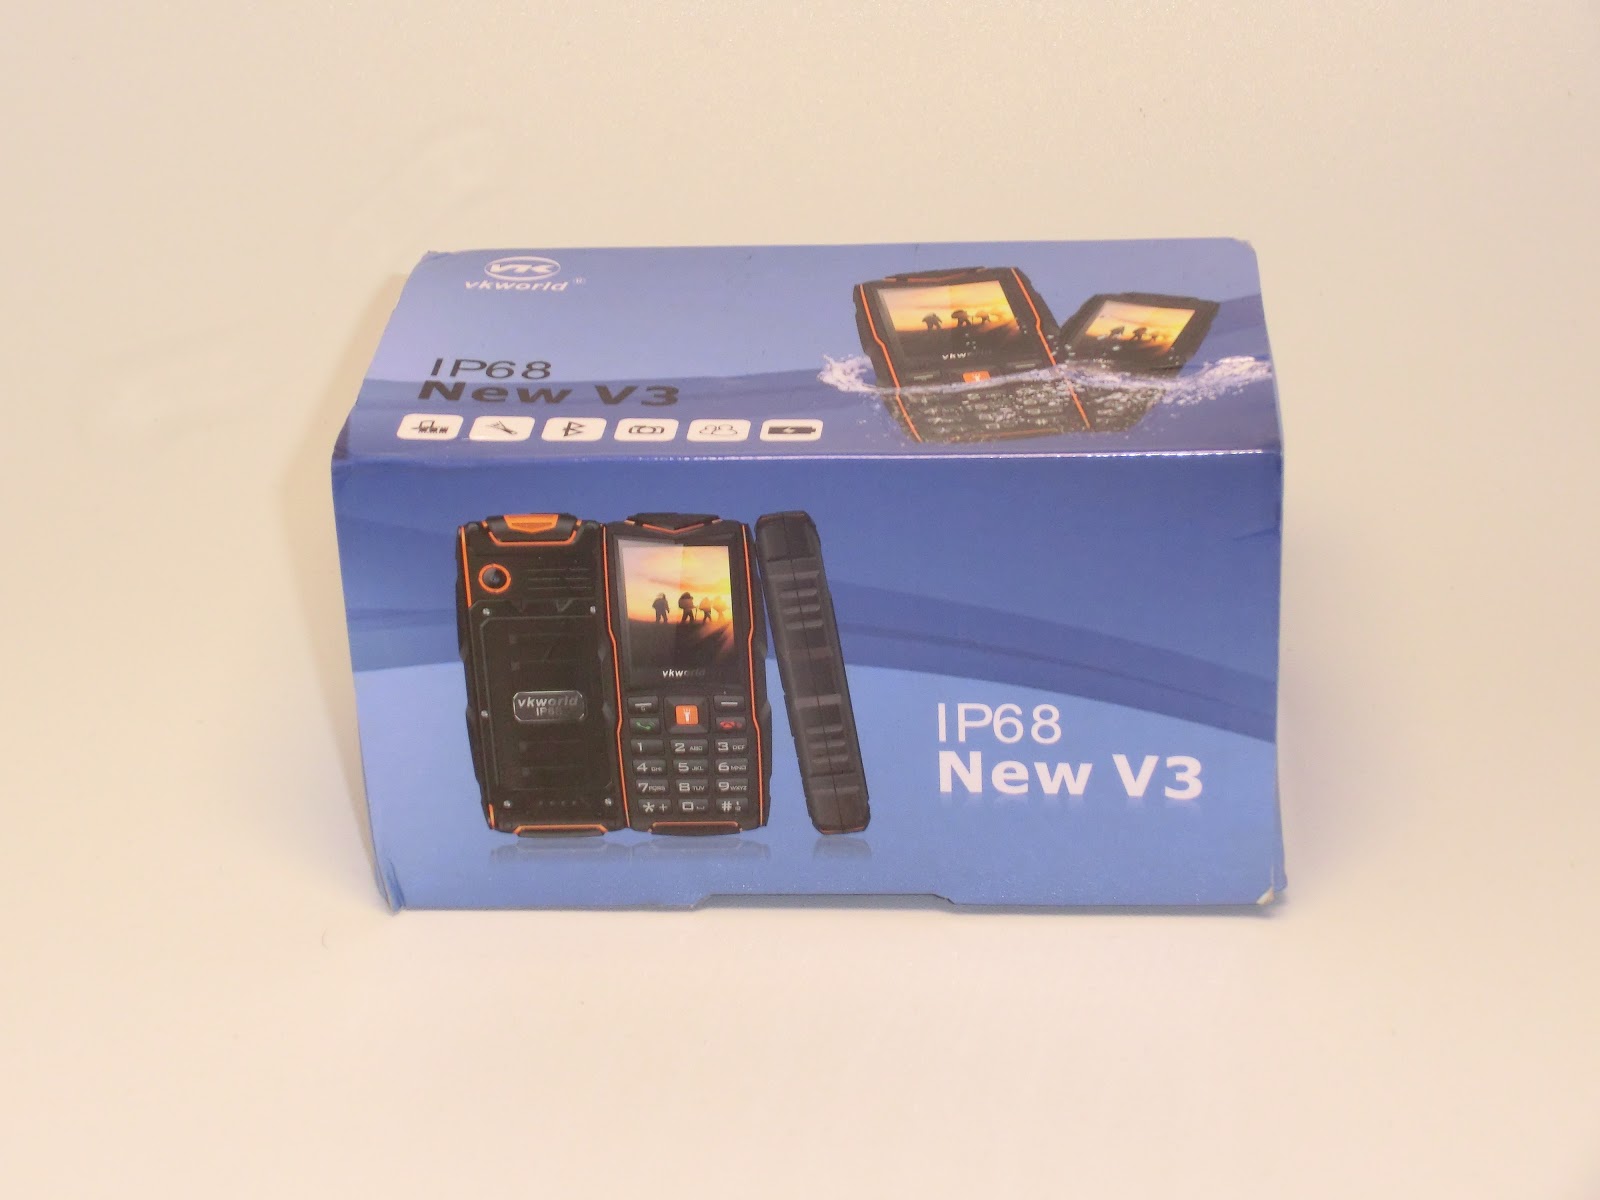 [REVIEW] VKWorld New Stone V3 (Robusto, IP68, Triple SIM, Classic Phone)